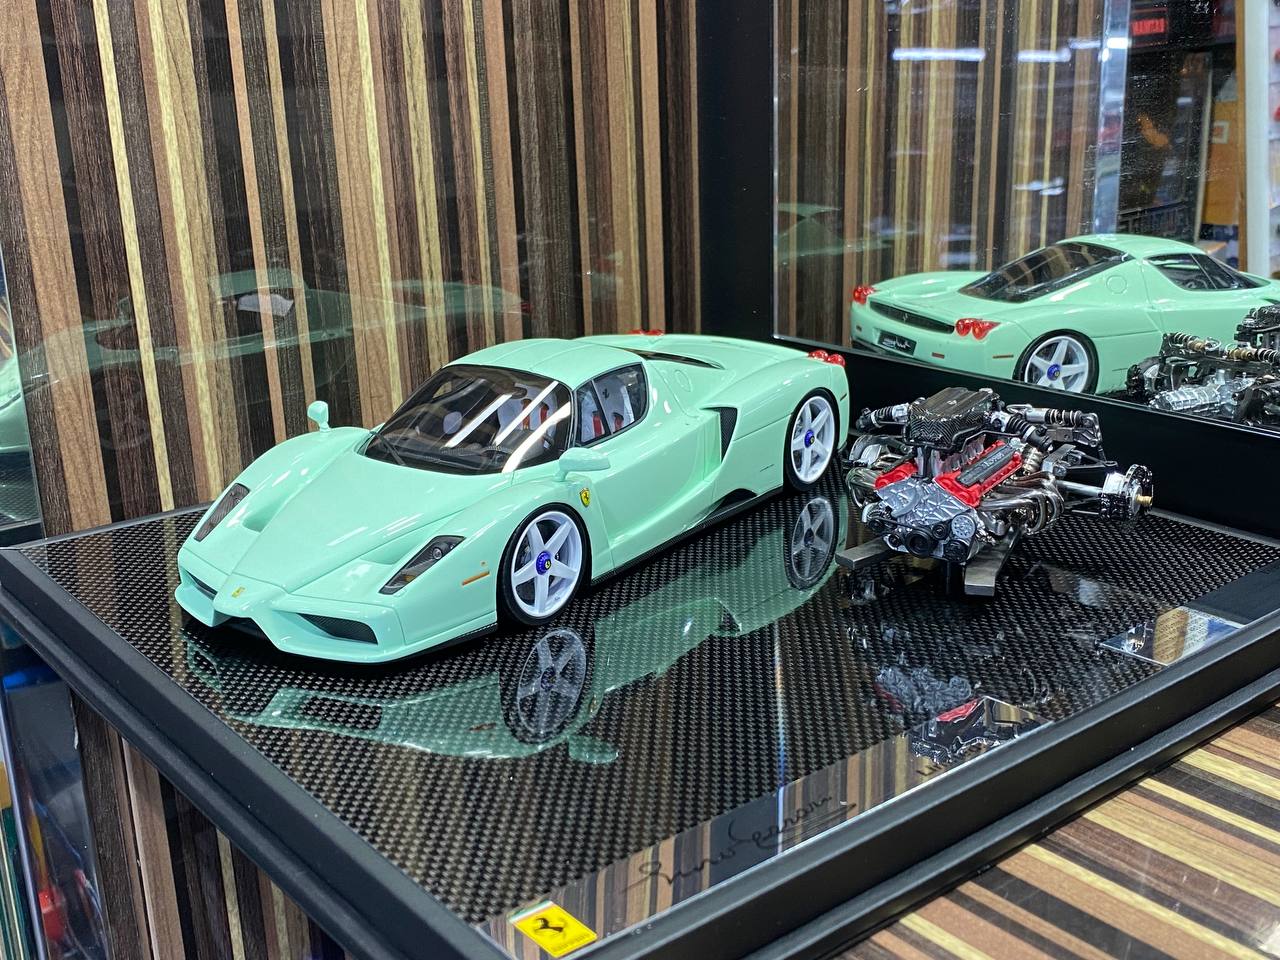 1/18 General Models Resin Model - Ferrari Enzo With Engine in Stunning Green|Sold in Dturman.com Dubai UAE.